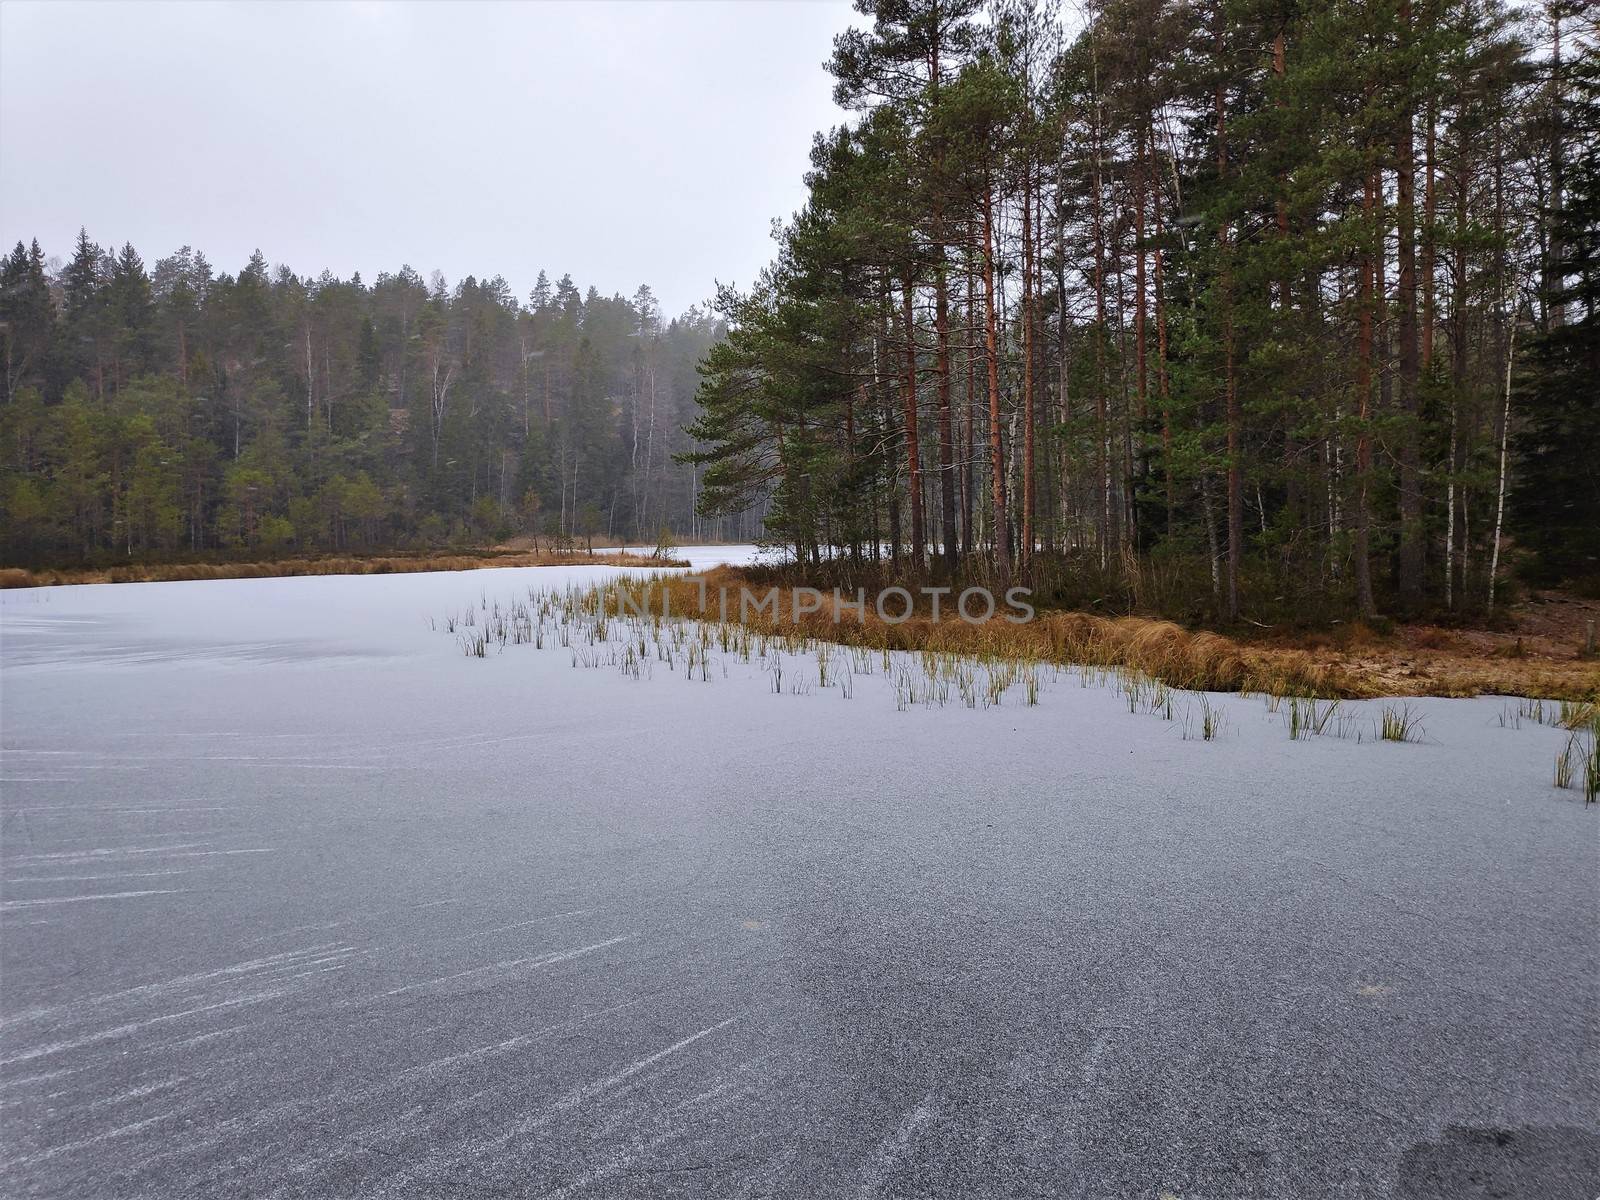 Frozen water in fron of island in Lake Haukkalampi, Finland